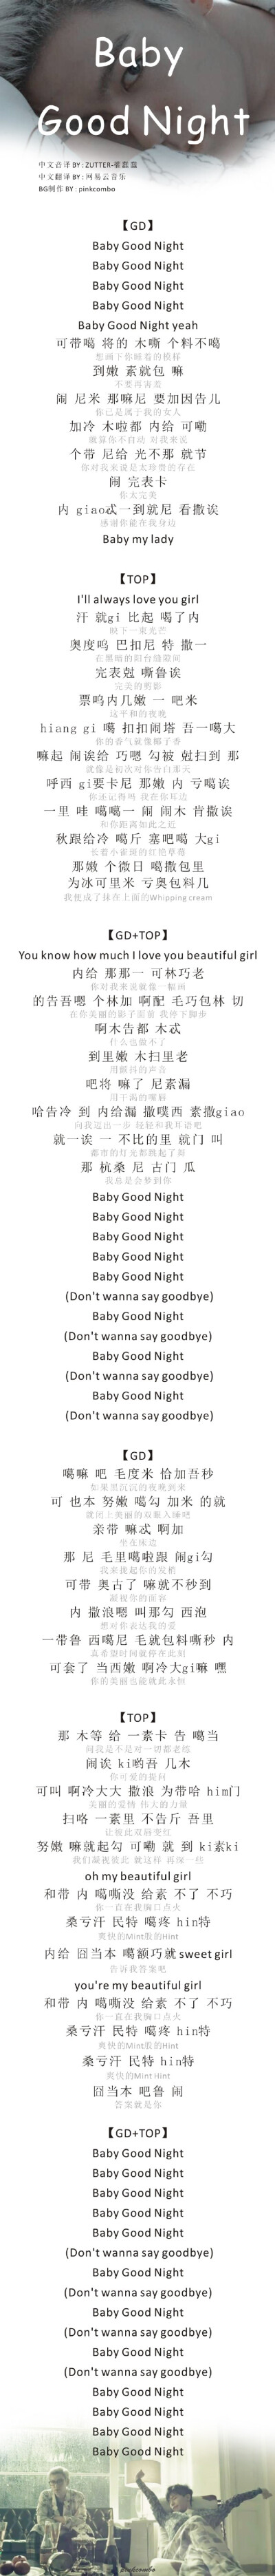 GD&T.O.P--- Baby good night